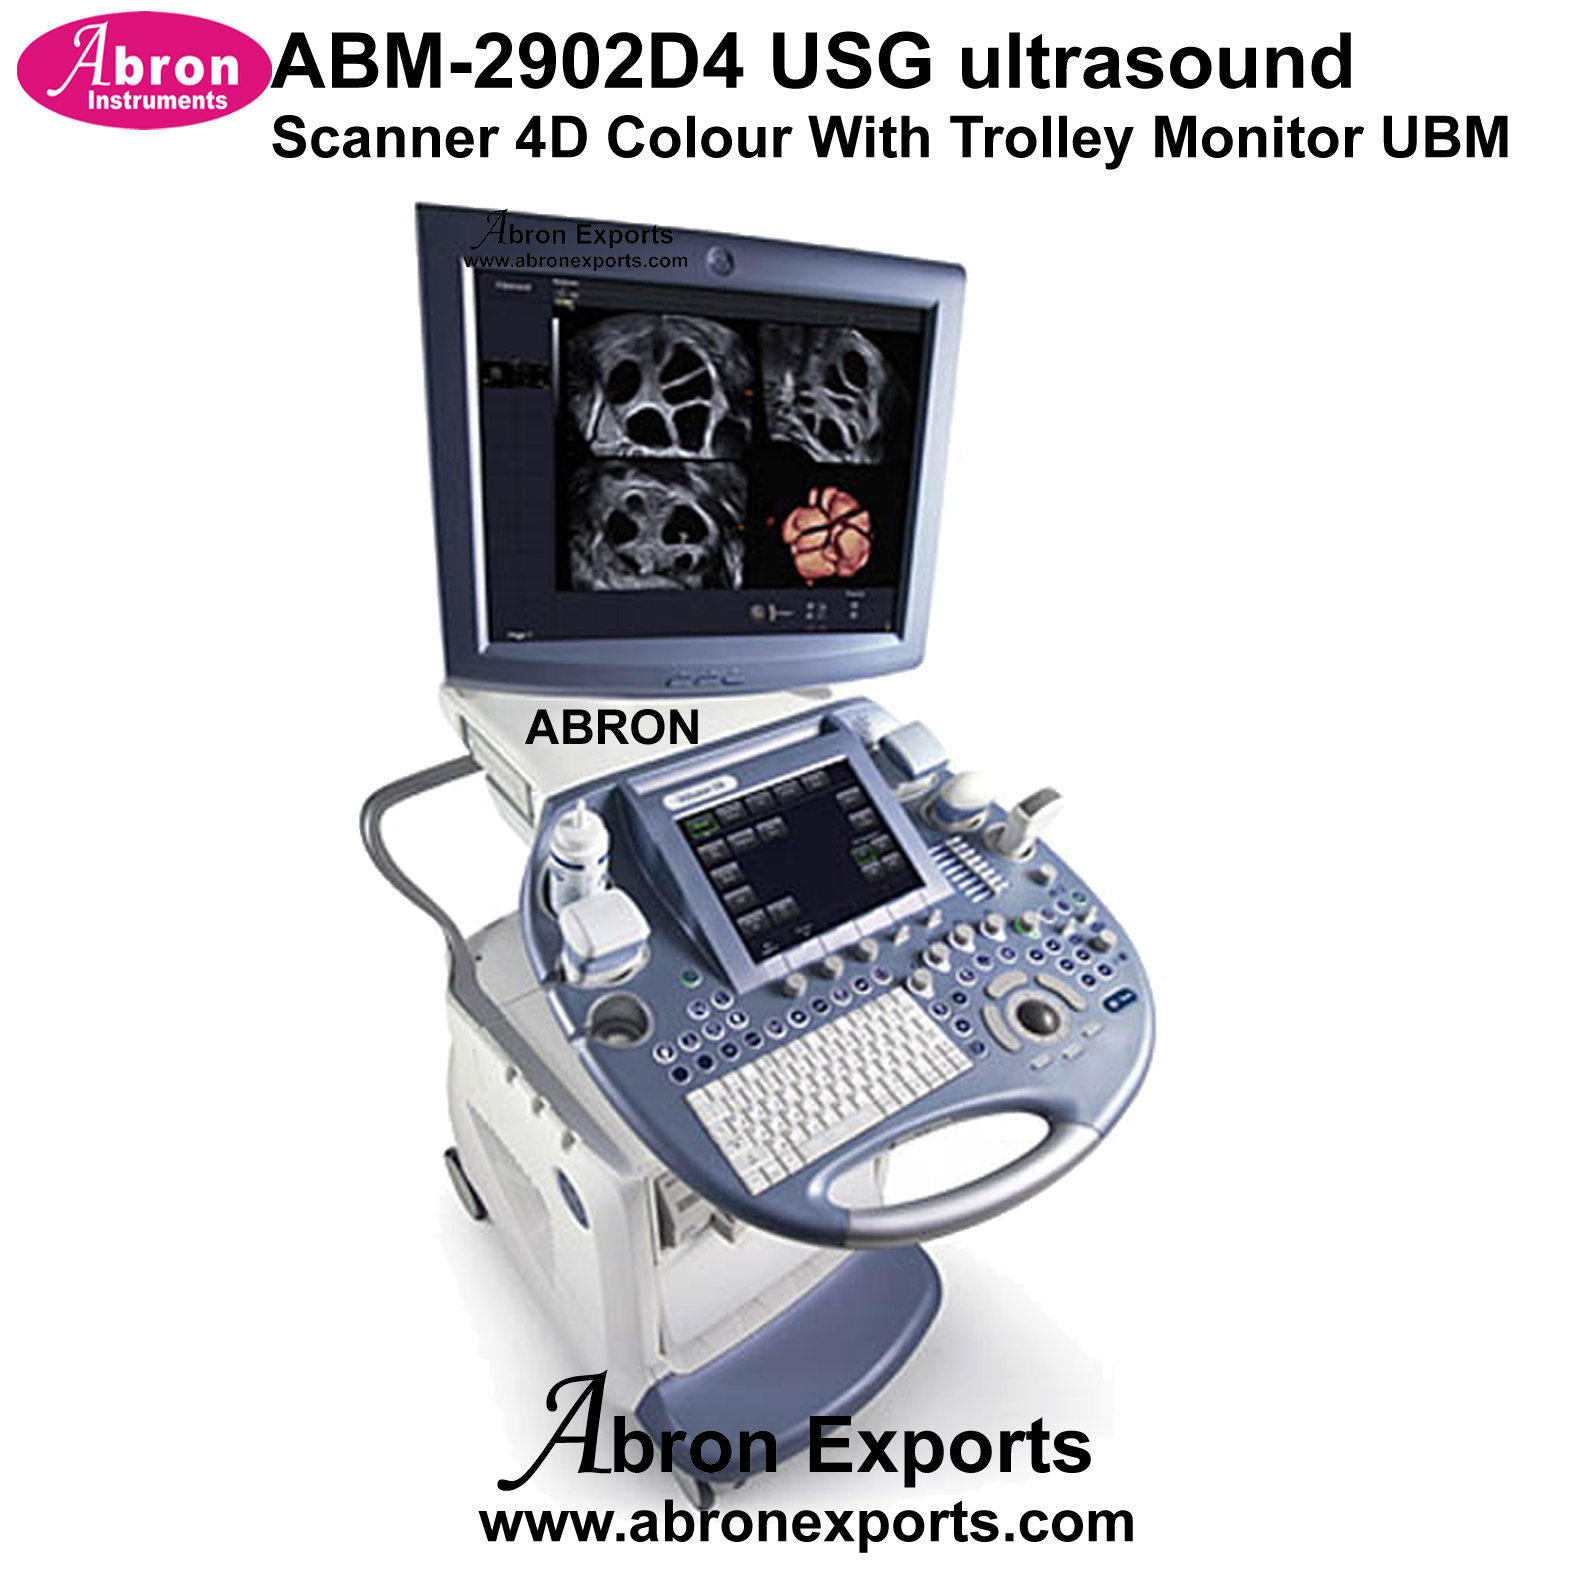 USG ultrasound scanner 4D Colour with trolley monitor scan Machine ubm Hospital Medical USG Abron ABM-2902D4 